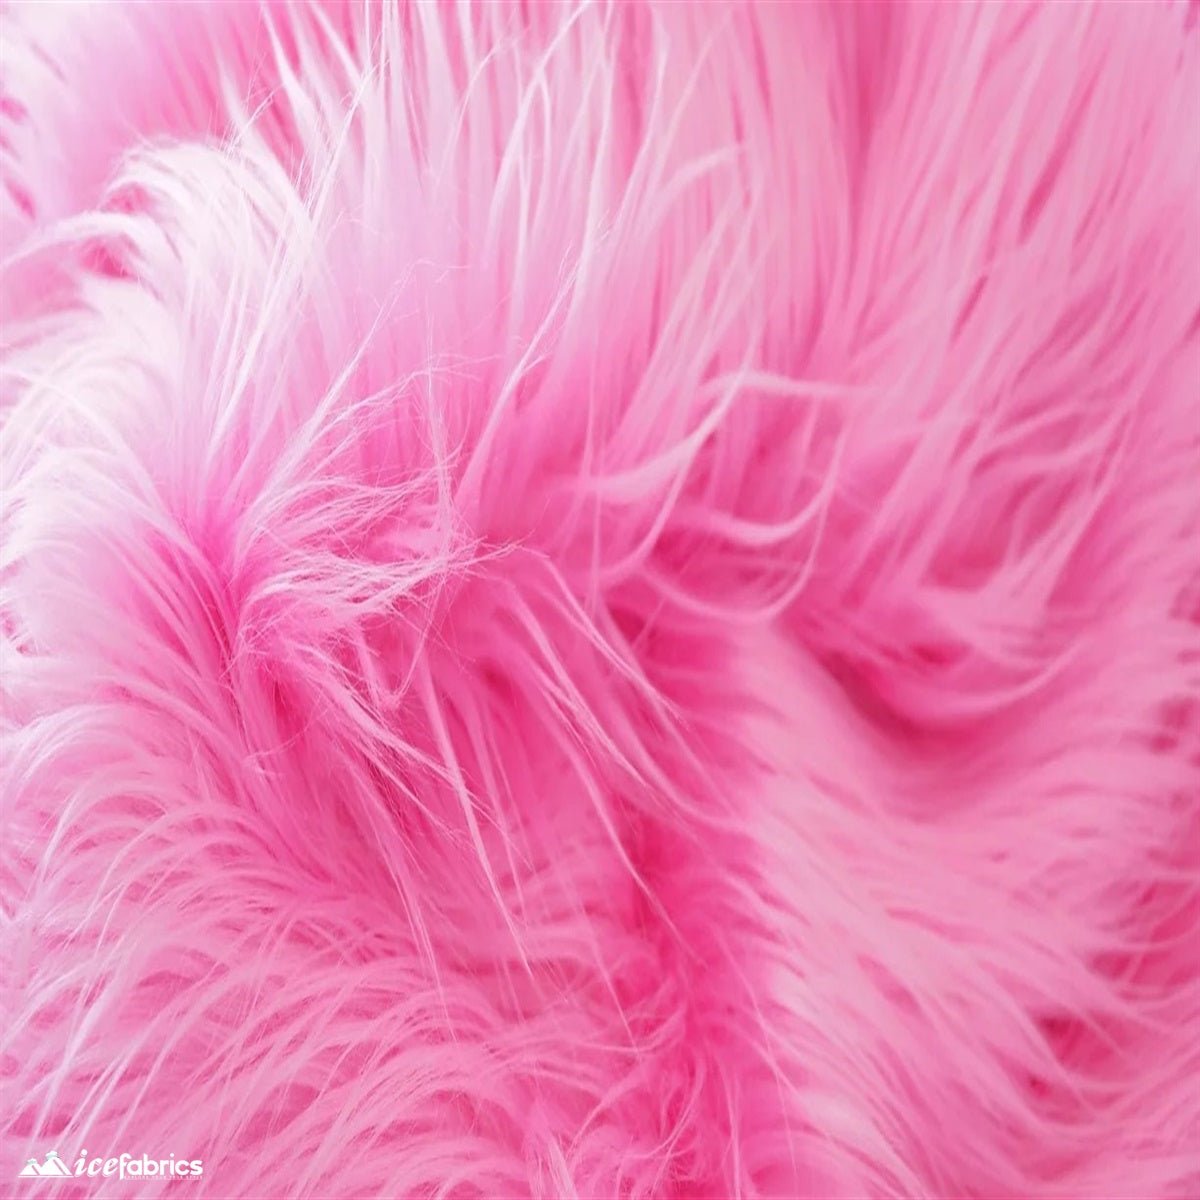 Shaggy Mohair Faux Fur Fabric/ 4 Inches Long PileICE FABRICSICE FABRICSHot Pink1/2 Yard (60 inches Wide)Shaggy Mohair Faux Fur Fabric/ 4 Inches Long Pile ICE FABRICS